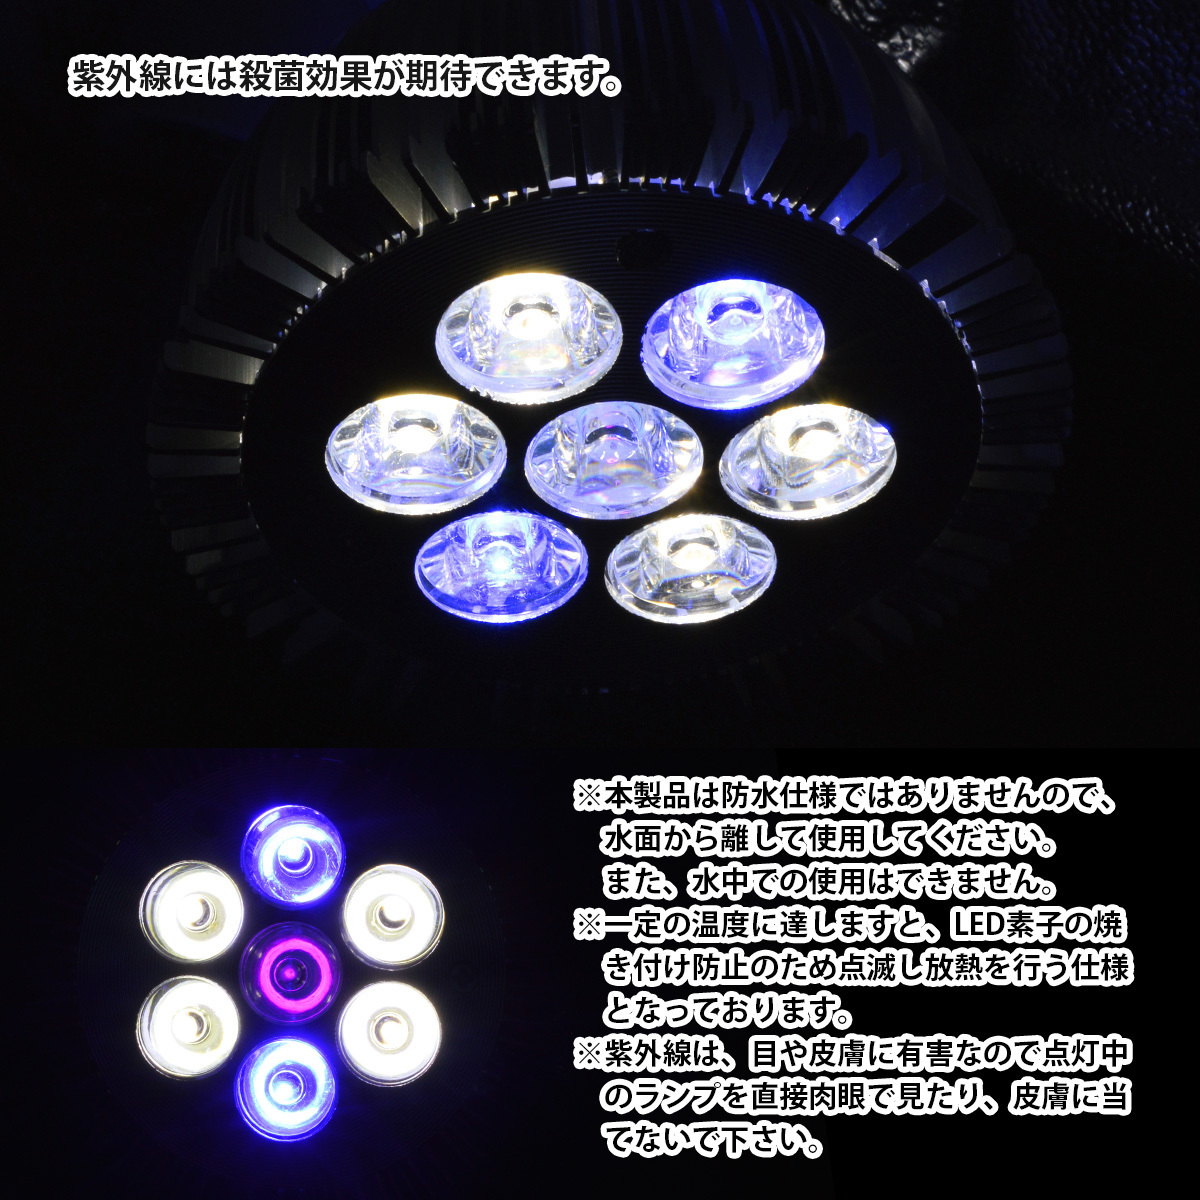 LED 電球 スポットライト 14W 白4/青2/紫外線1灯UV 水槽照明 E26 LEDスポットライト 電気 水草 サンゴ 熱帯魚 観賞魚 植物育成_画像4